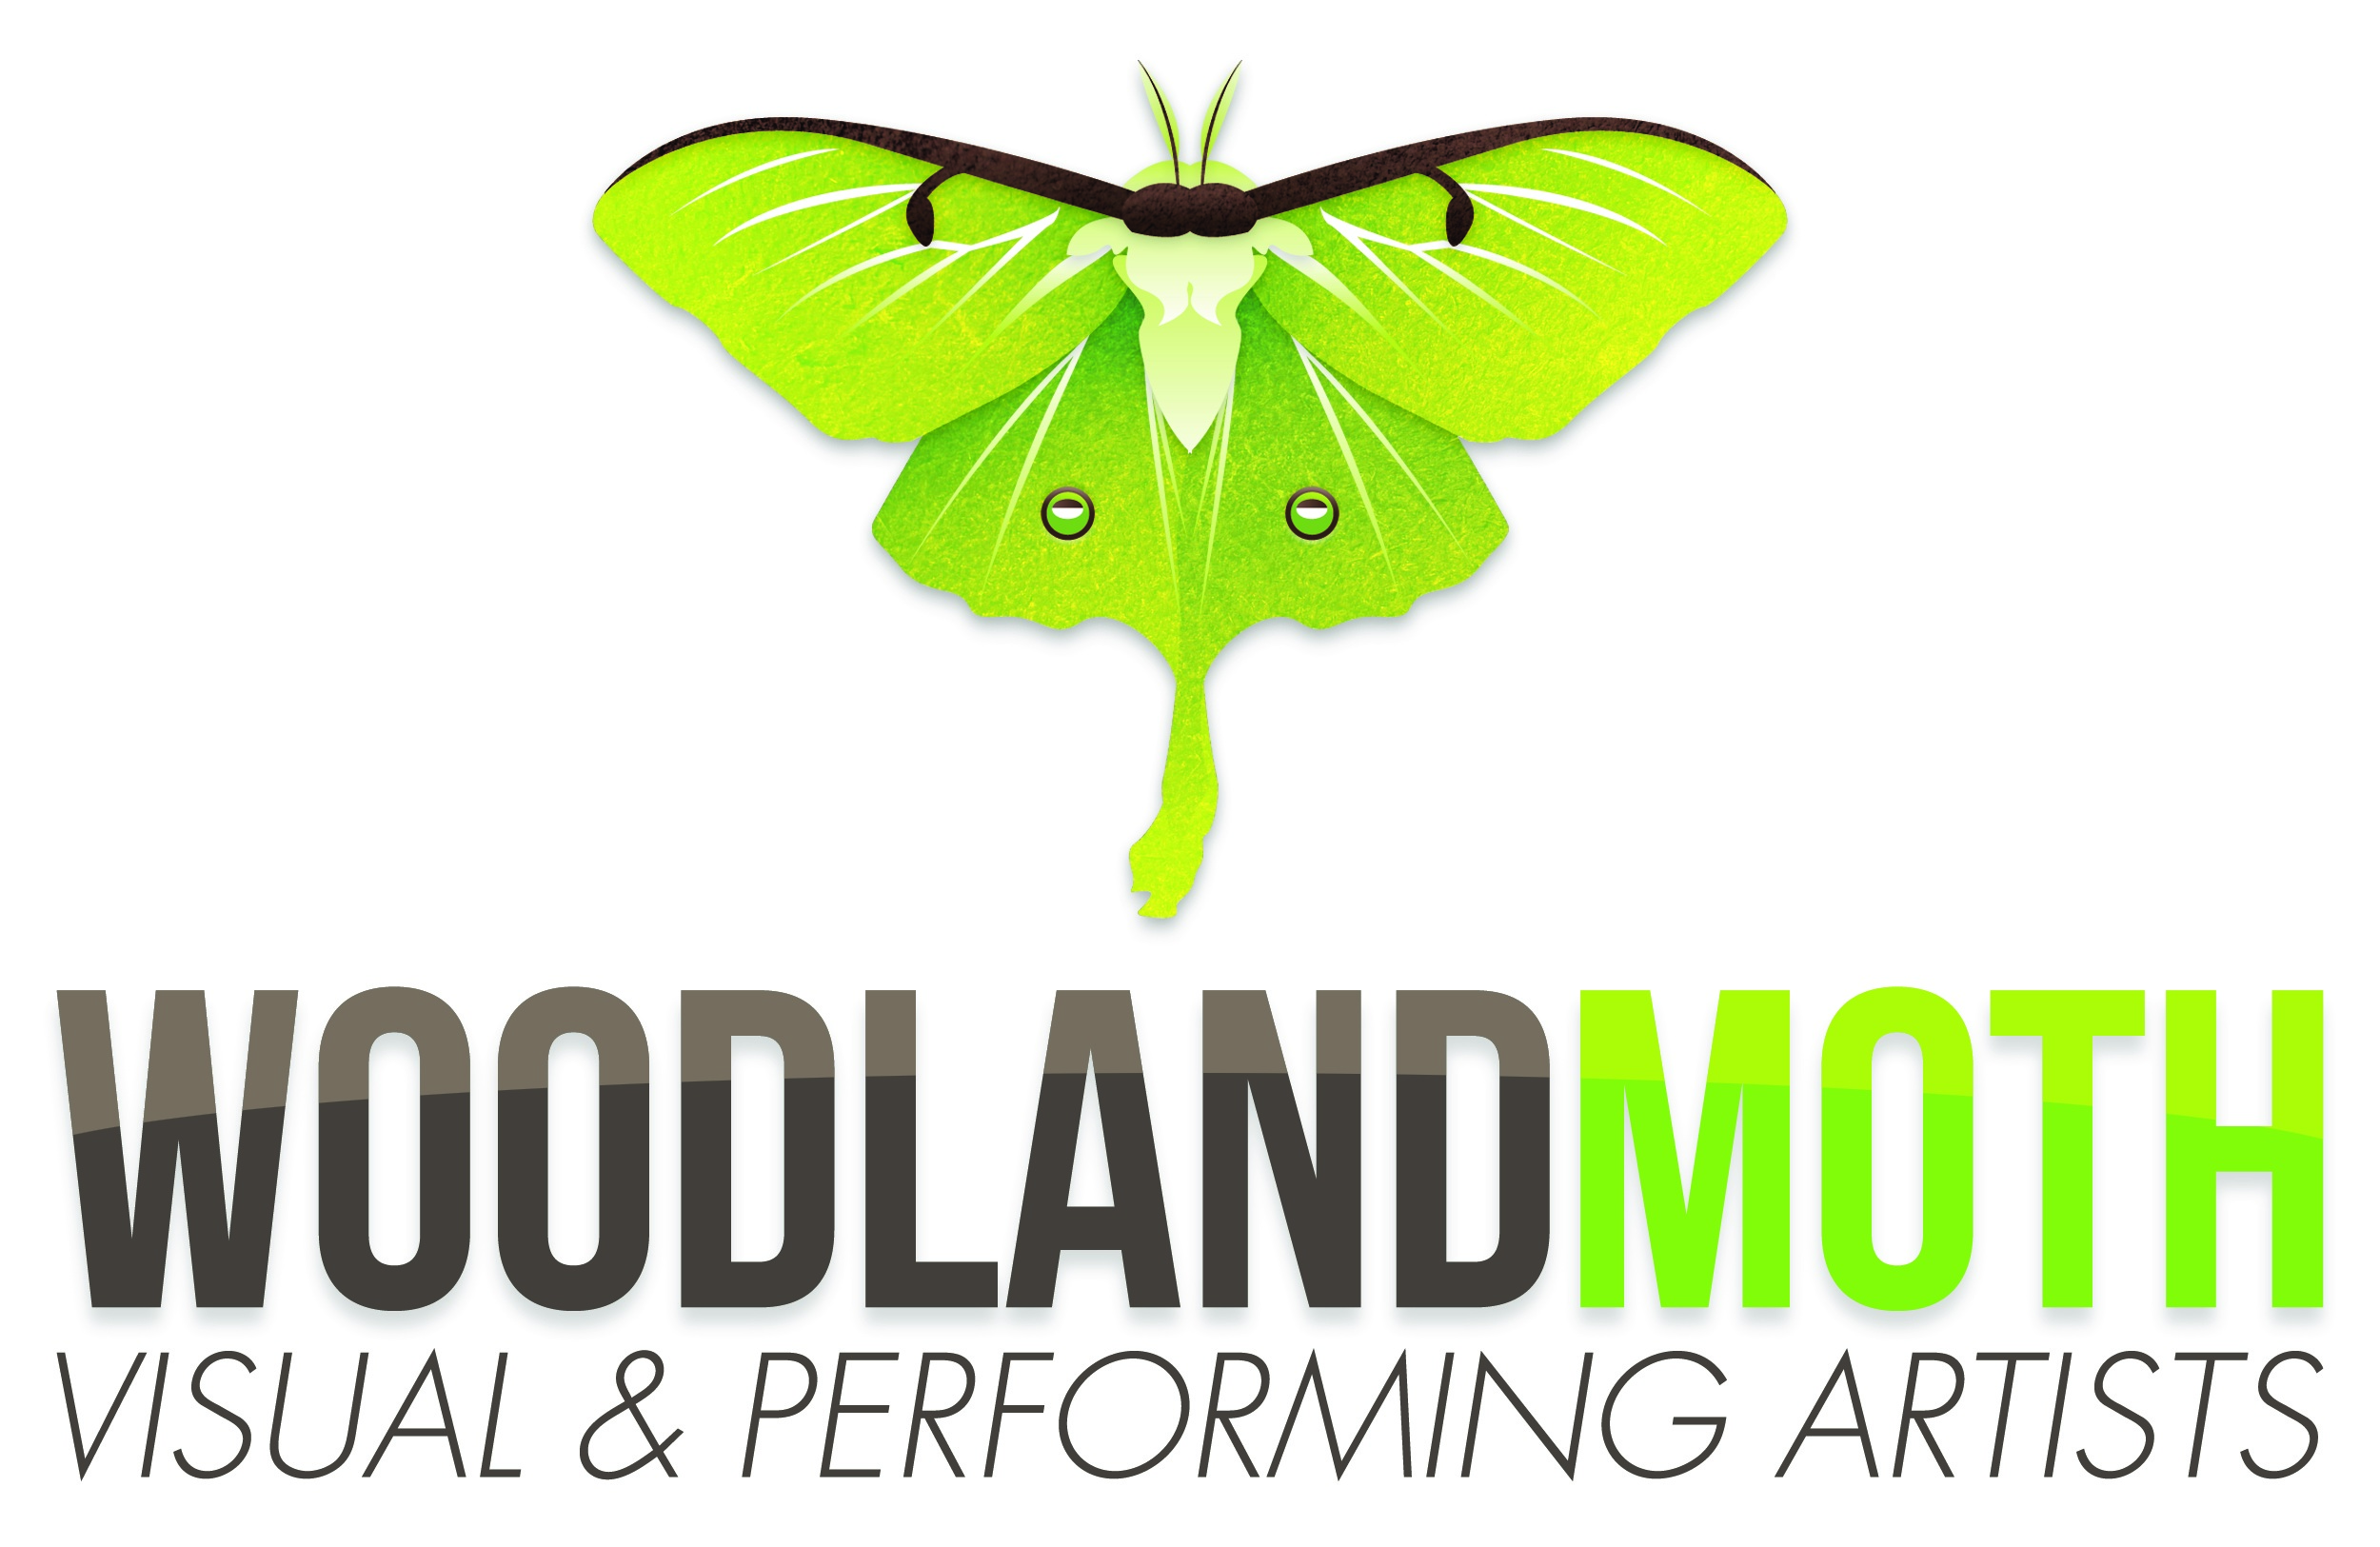 Woodland Moth